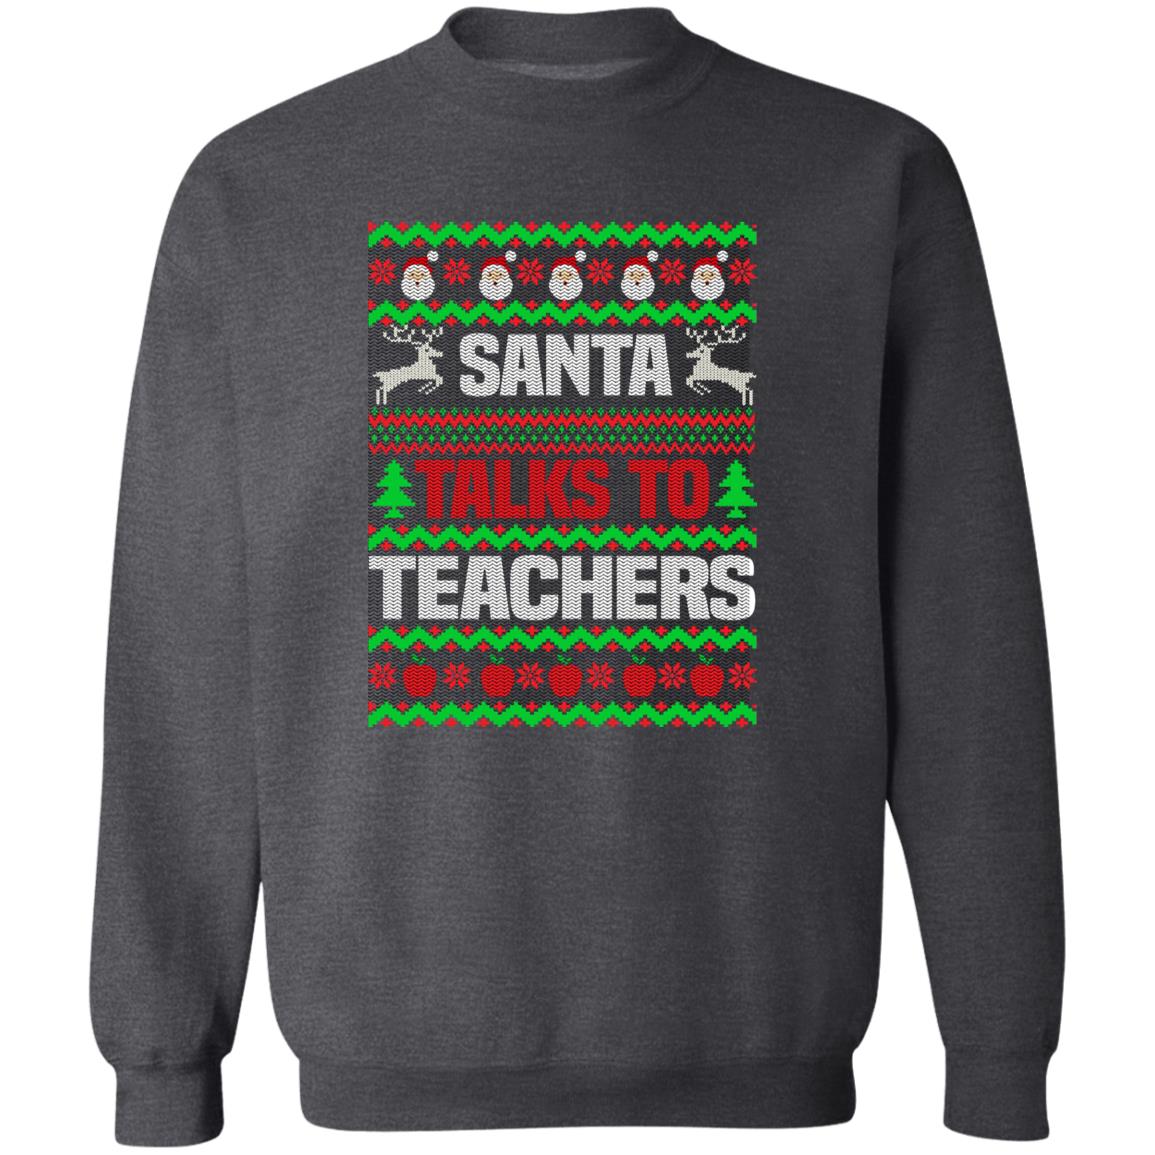 Santa talks to teachers Christmas Unisex Sweatshirt Ugly sweater Black Dark Heather-Family-Gift-Planet